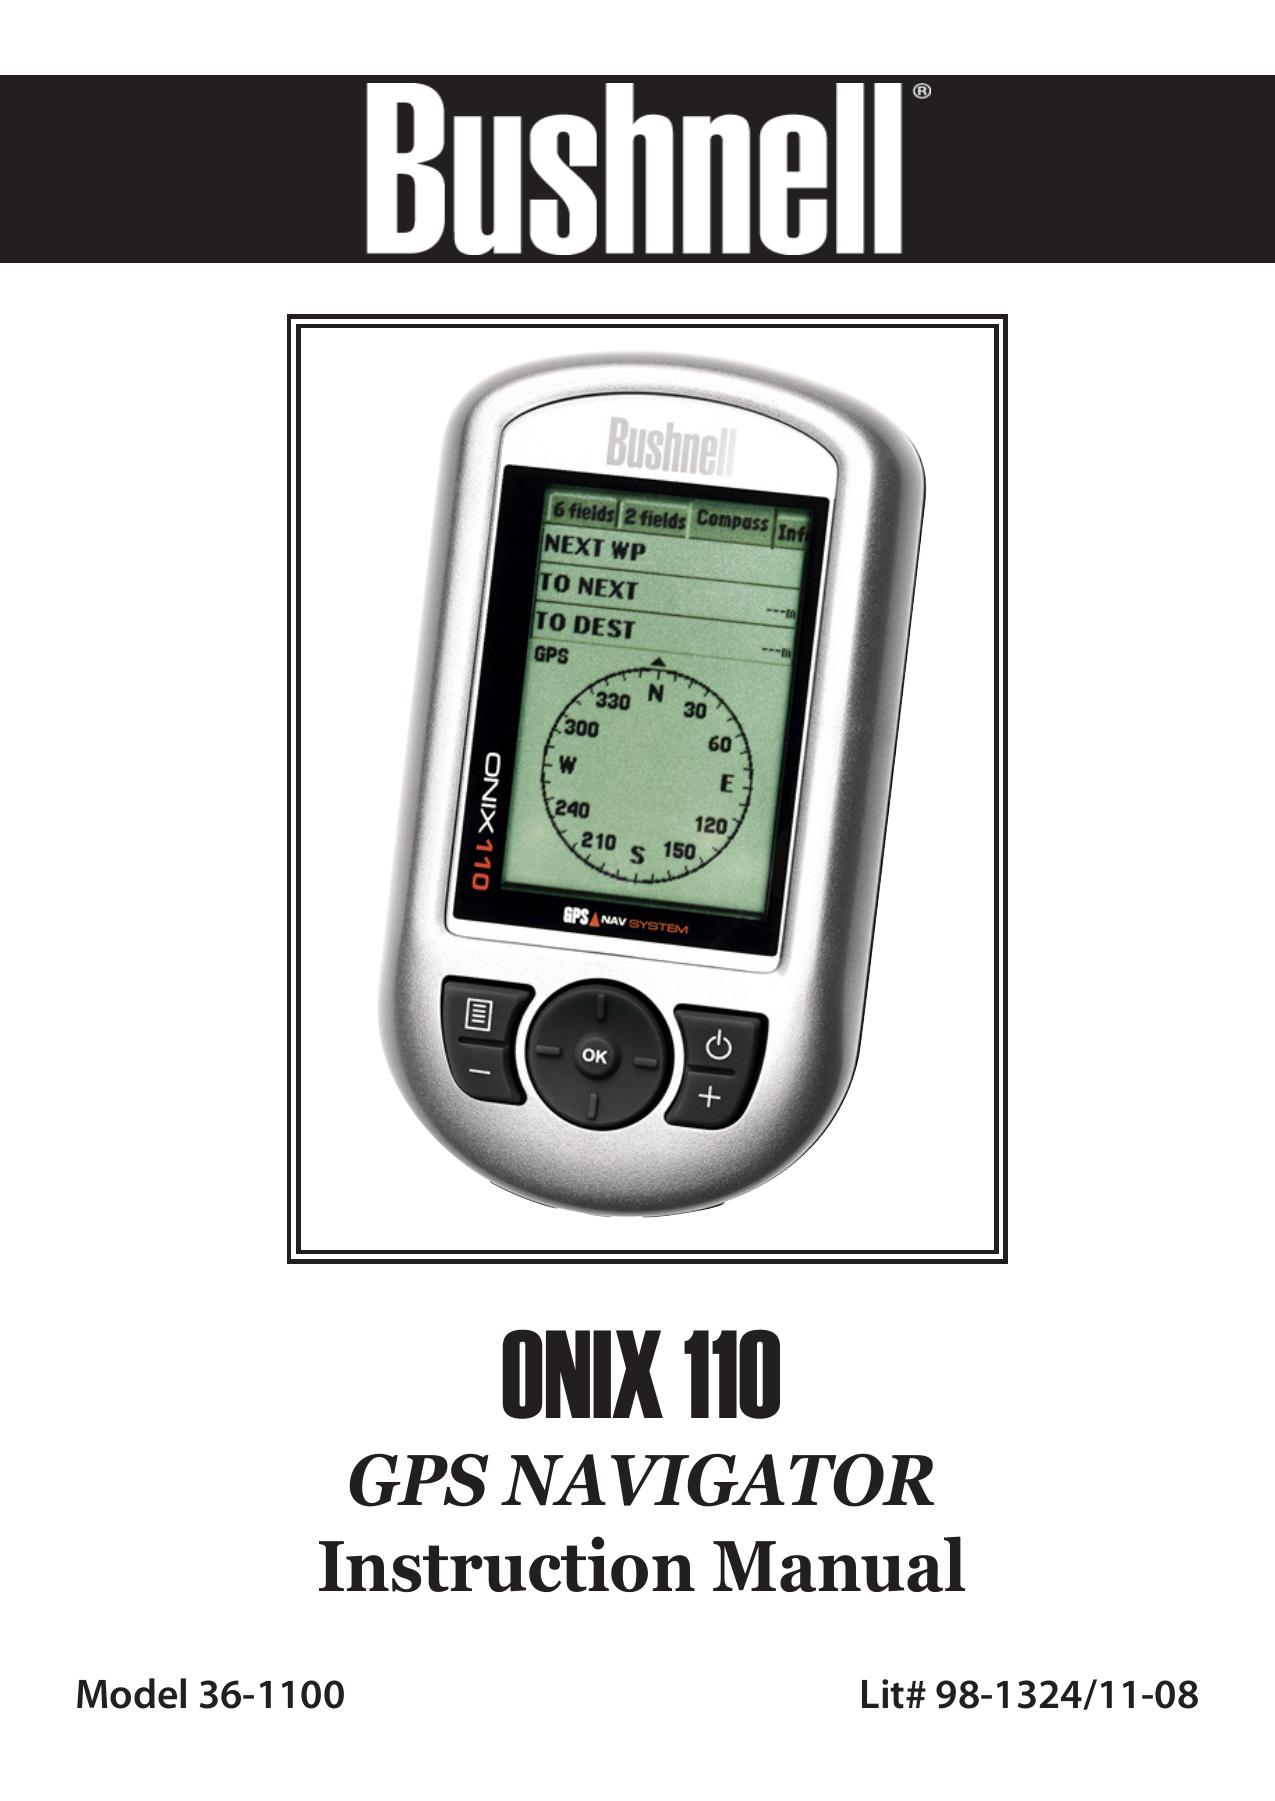 Bushnell 36-1100 Marine GPS System User Manual